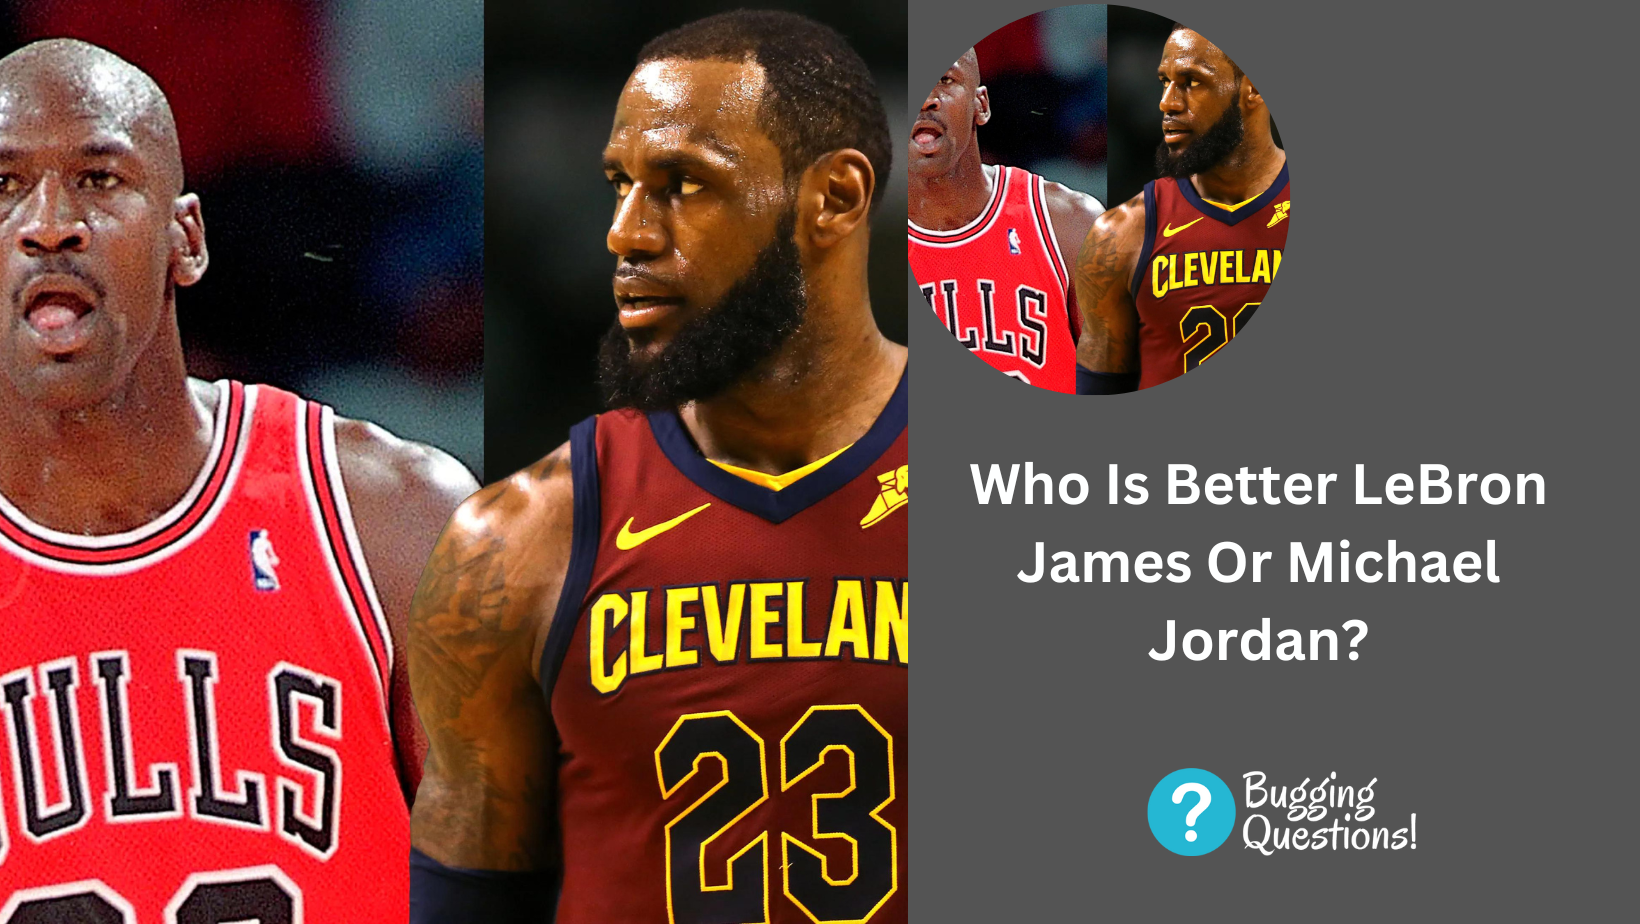 Who Is Better LeBron James Or Michael Jordan?